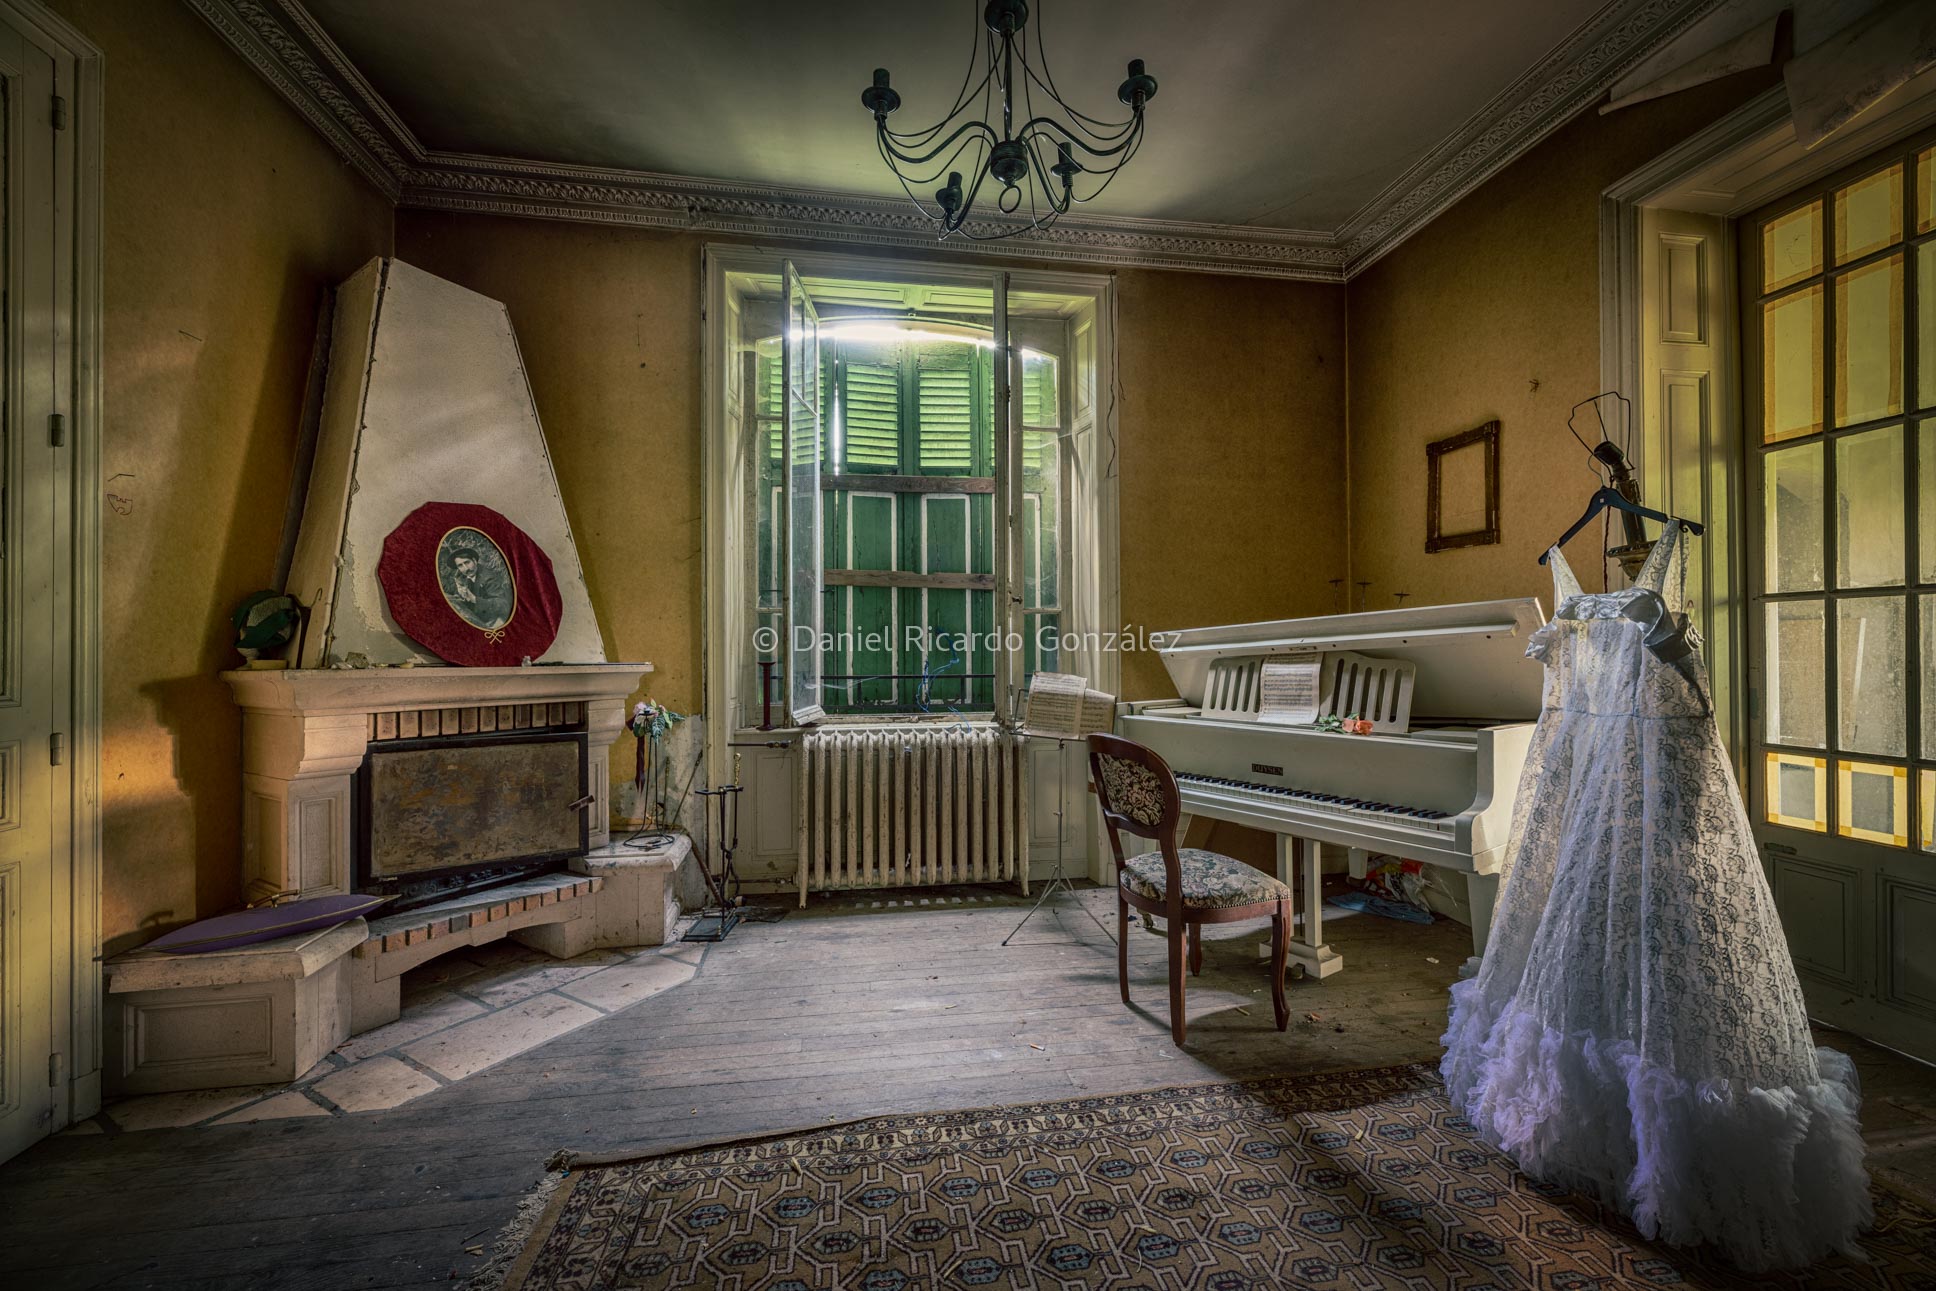 Verlassenes Château in Frankreich mit Hochzeitskleid. Abandoned château in France with Wedding dress.